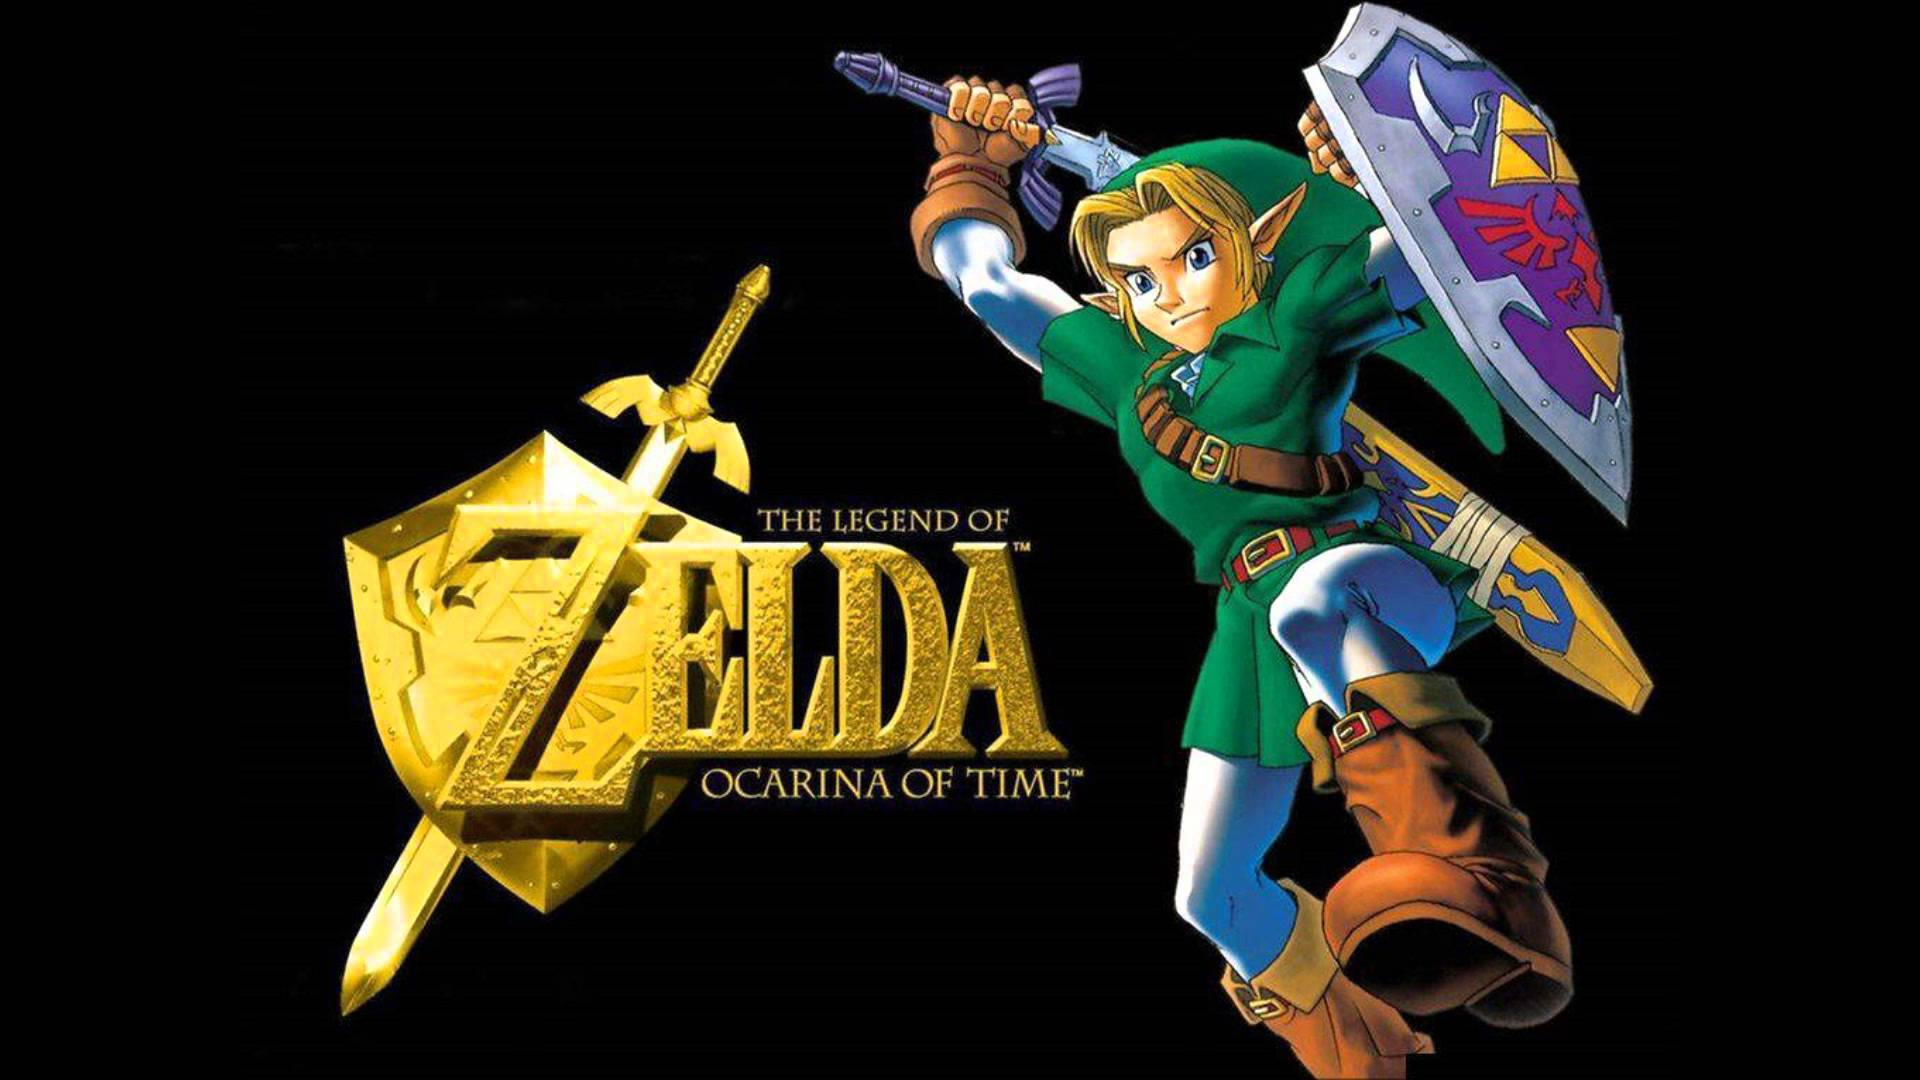 1920x1080 The Legend of Zelda Ocarina of time Wallpaper | Wallpapers# | Super Mayhem